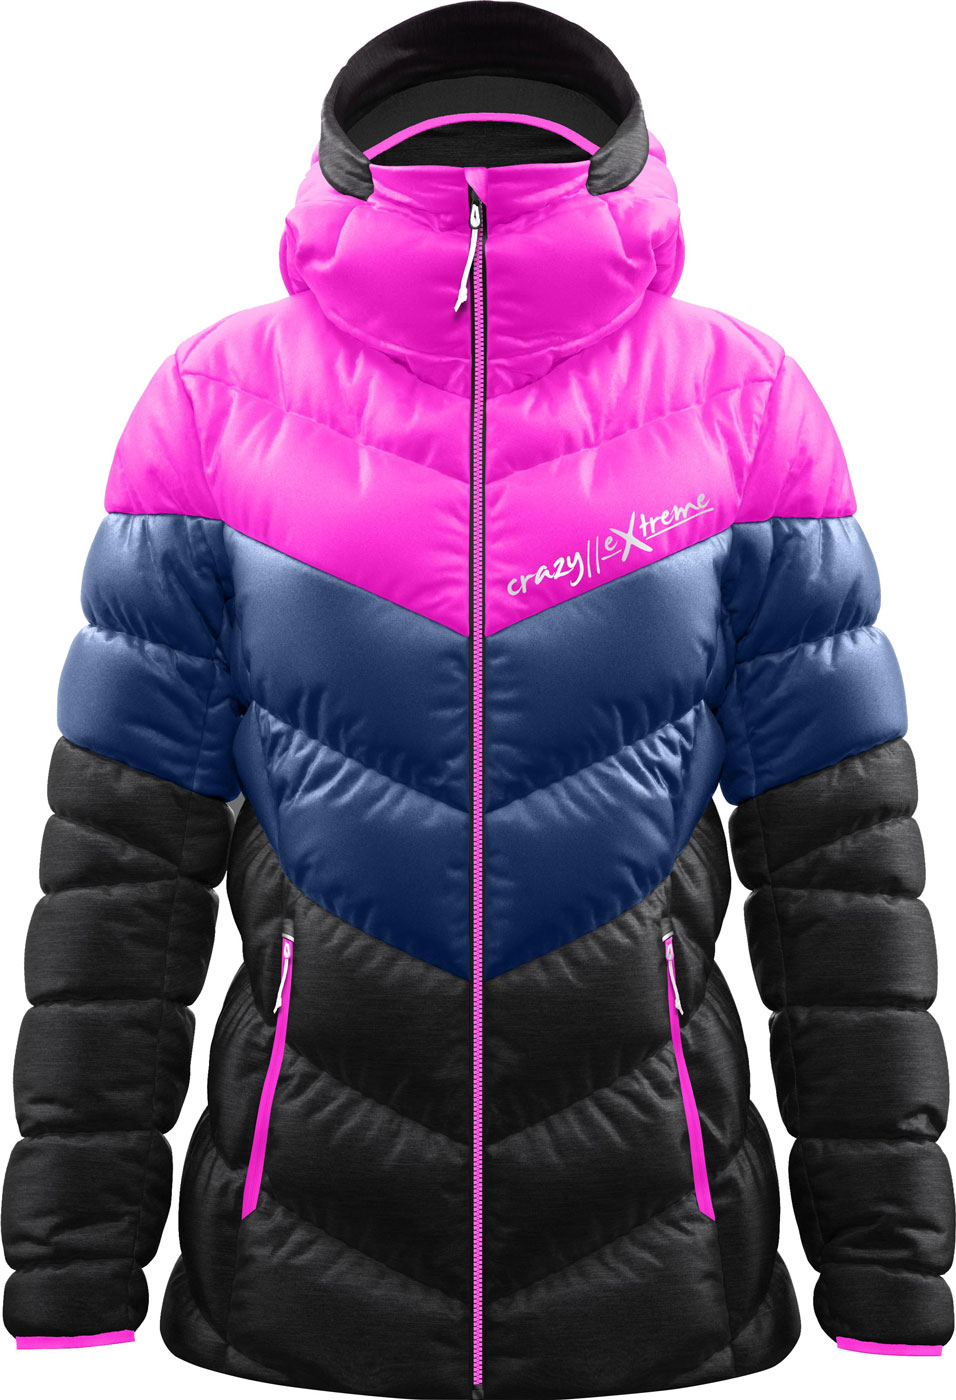 Jkt Gardena online Everest Jackets buy Idea Women - Sport - at Crazy